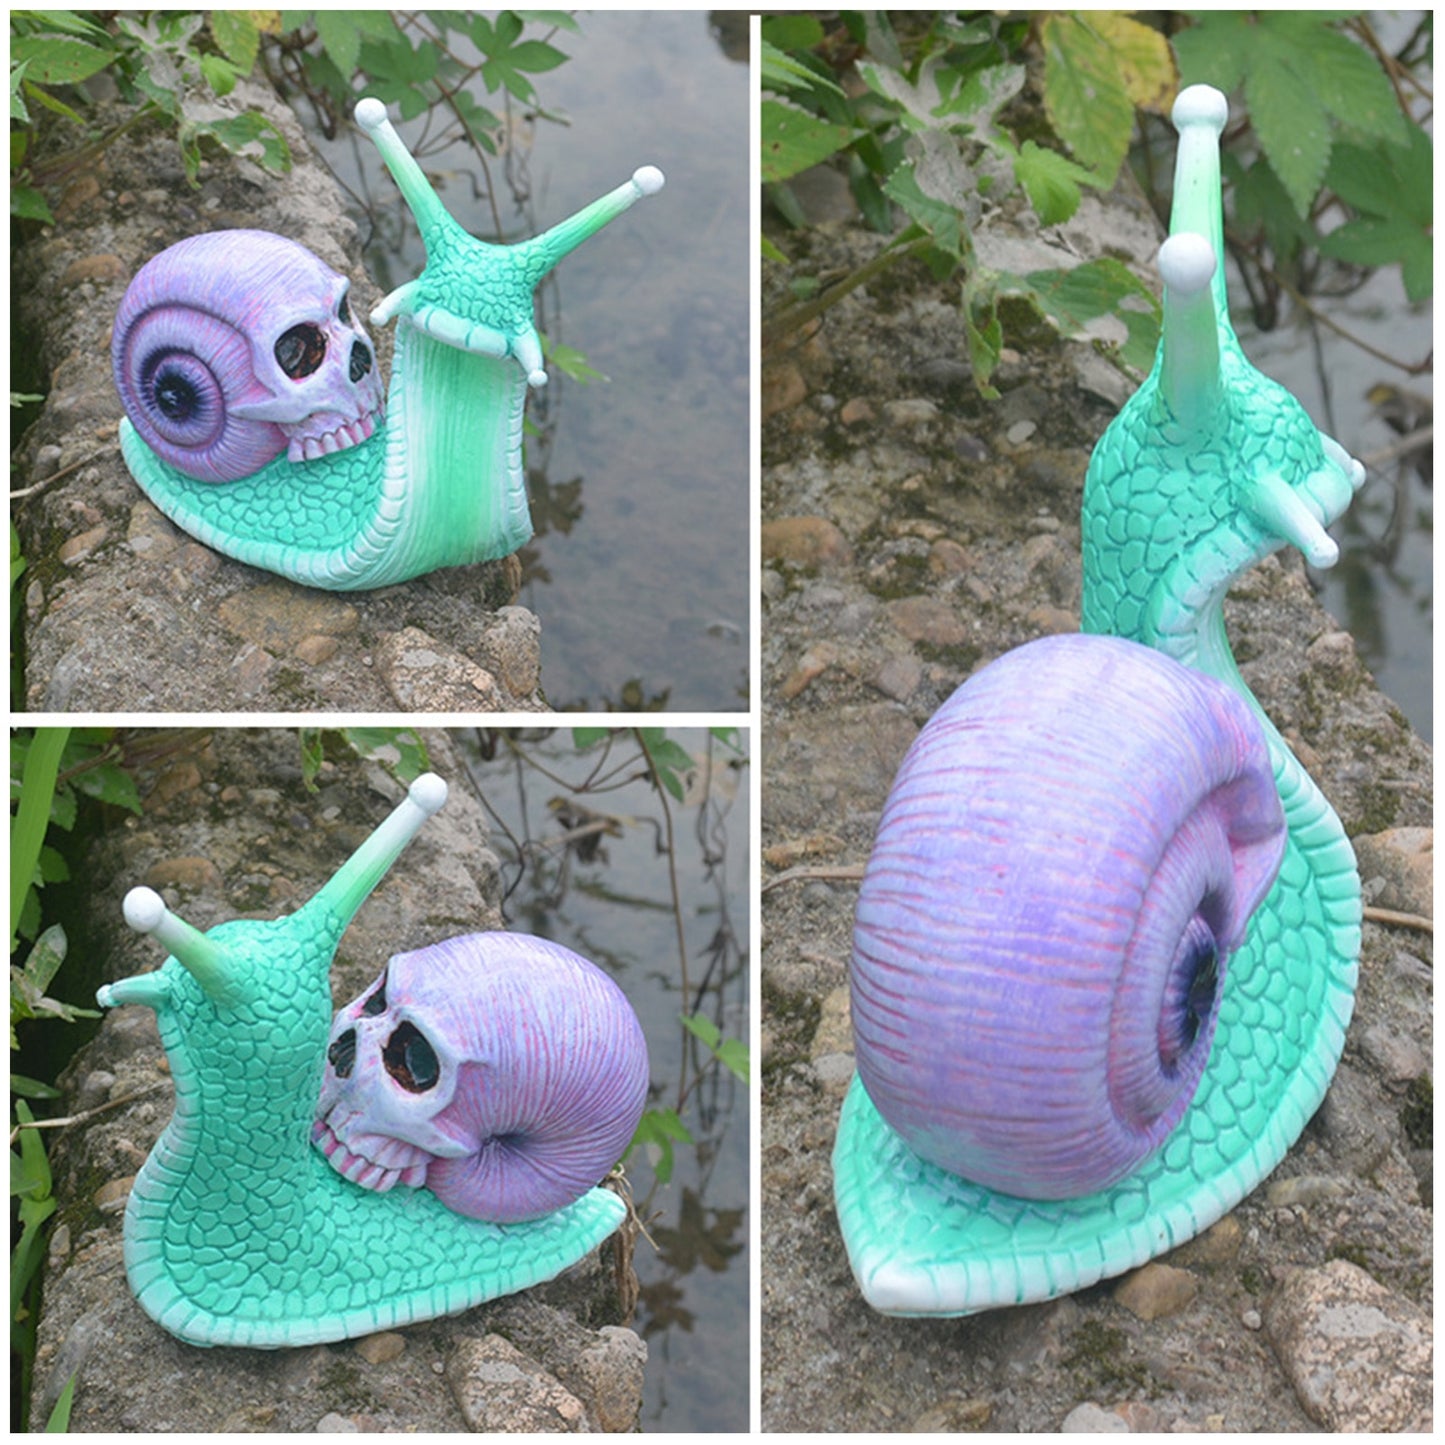 Purple Snail Sculpture / Skull Sculpture / Snail Garden Statues / Gothic Decoration